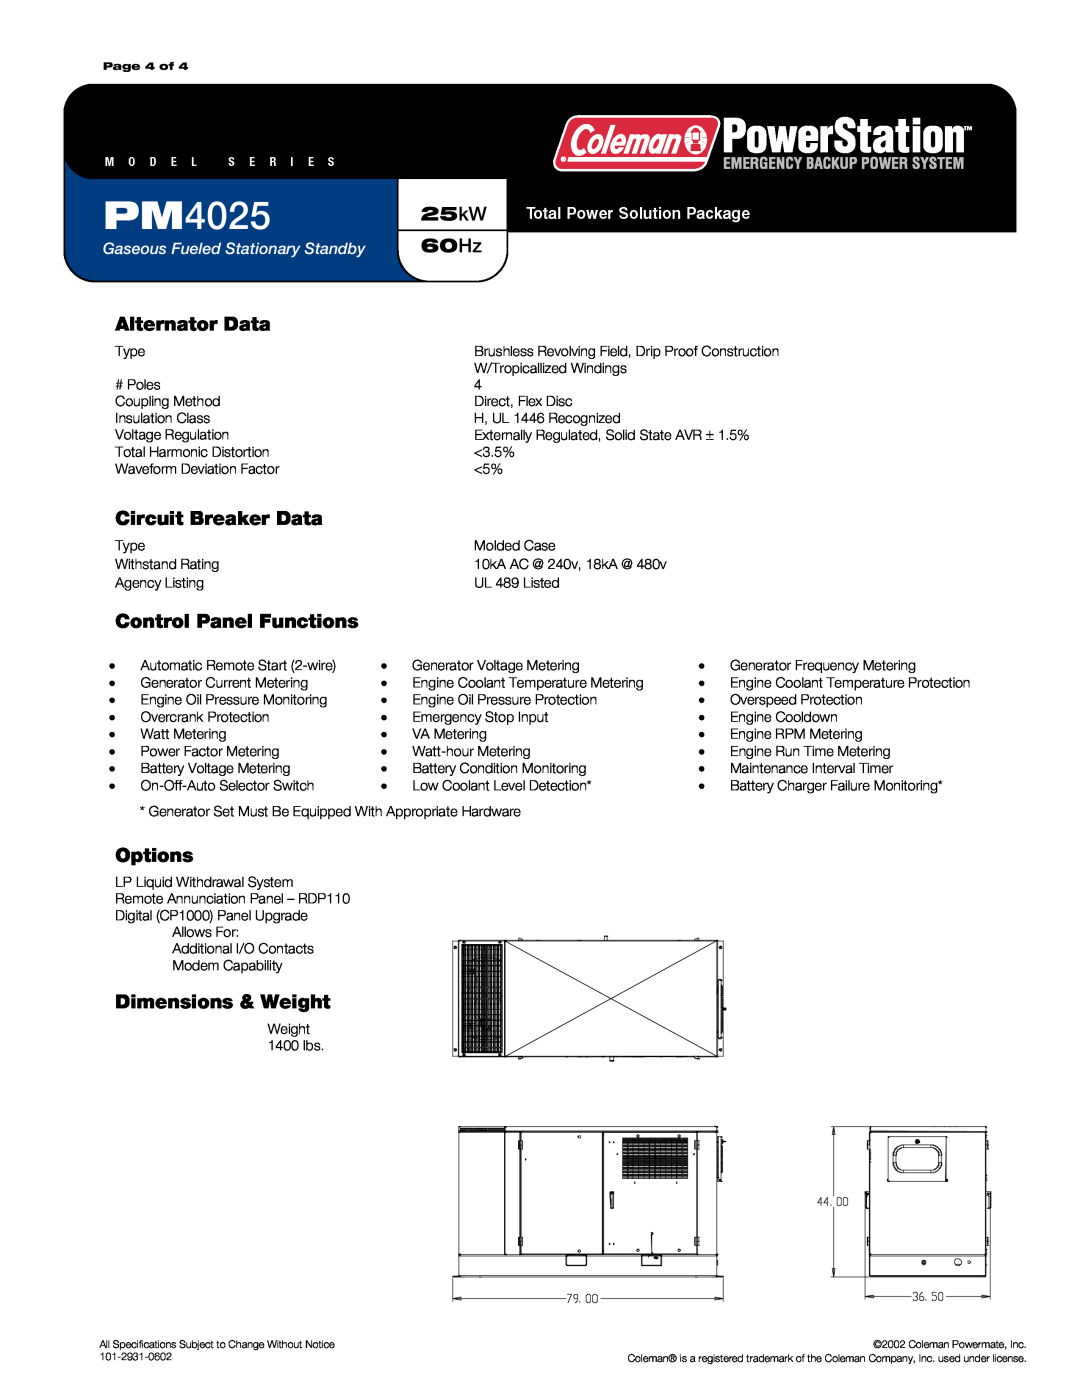 Powermate PM4025 Alternator Data, Circuit Breaker Data, Control Panel Functions, Options, Dimensions & Weight, 25kW 60Hz 